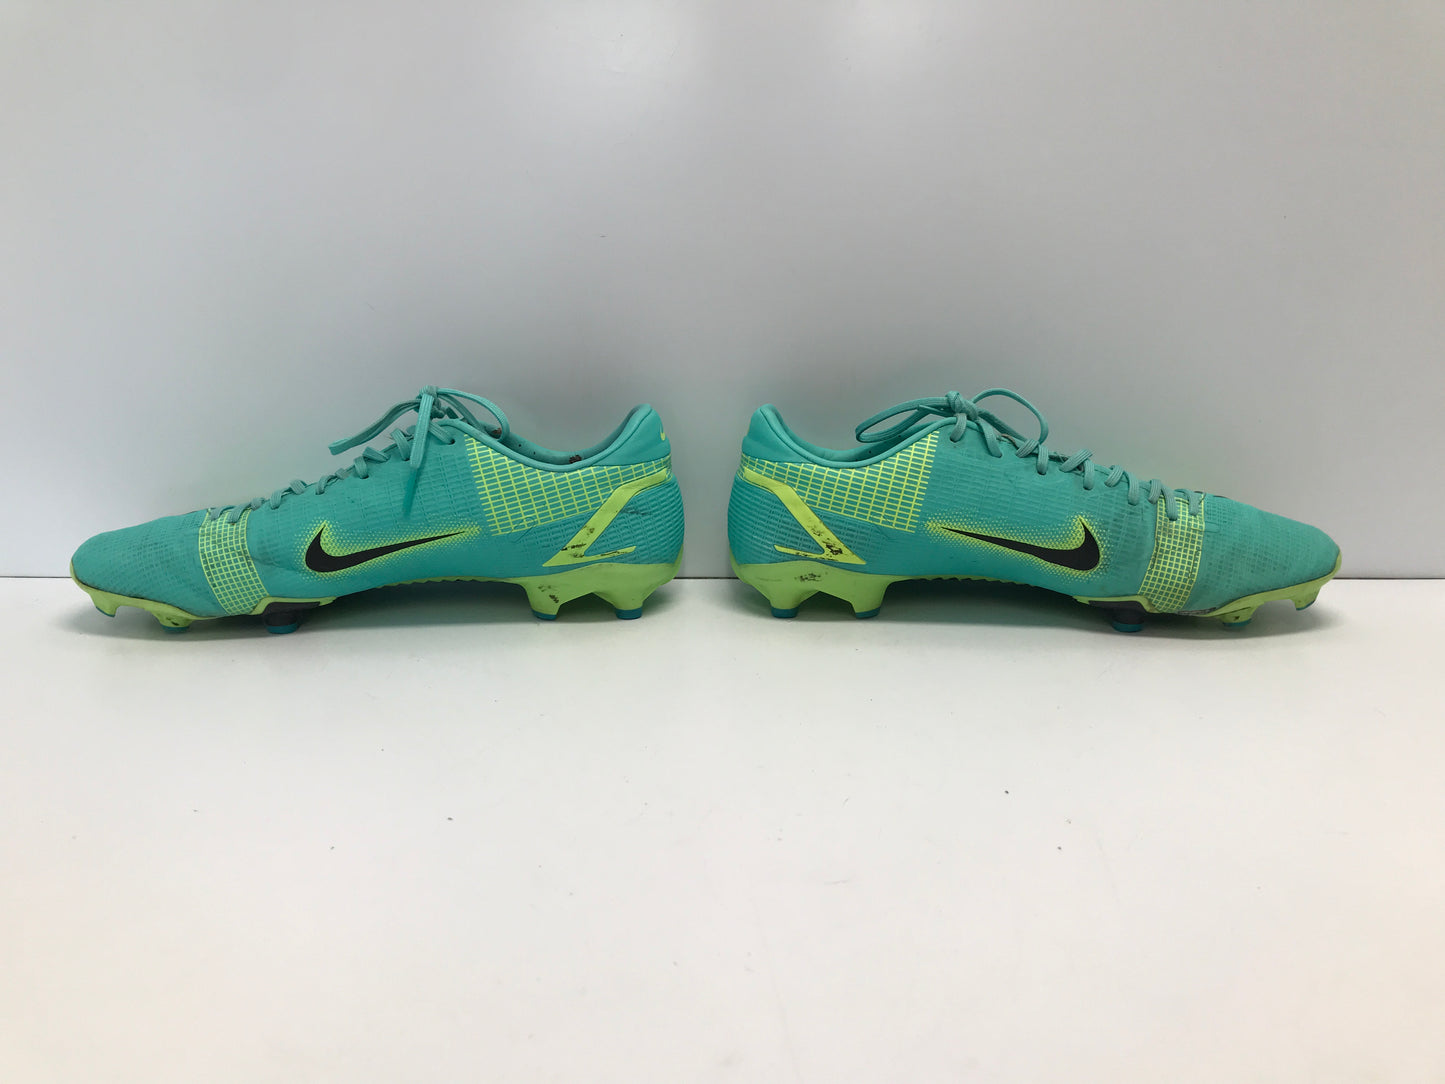 Soccer Shoes Cleats Men's Size 10 Nike Mercurial Aqua Blue Lime Minor Wear